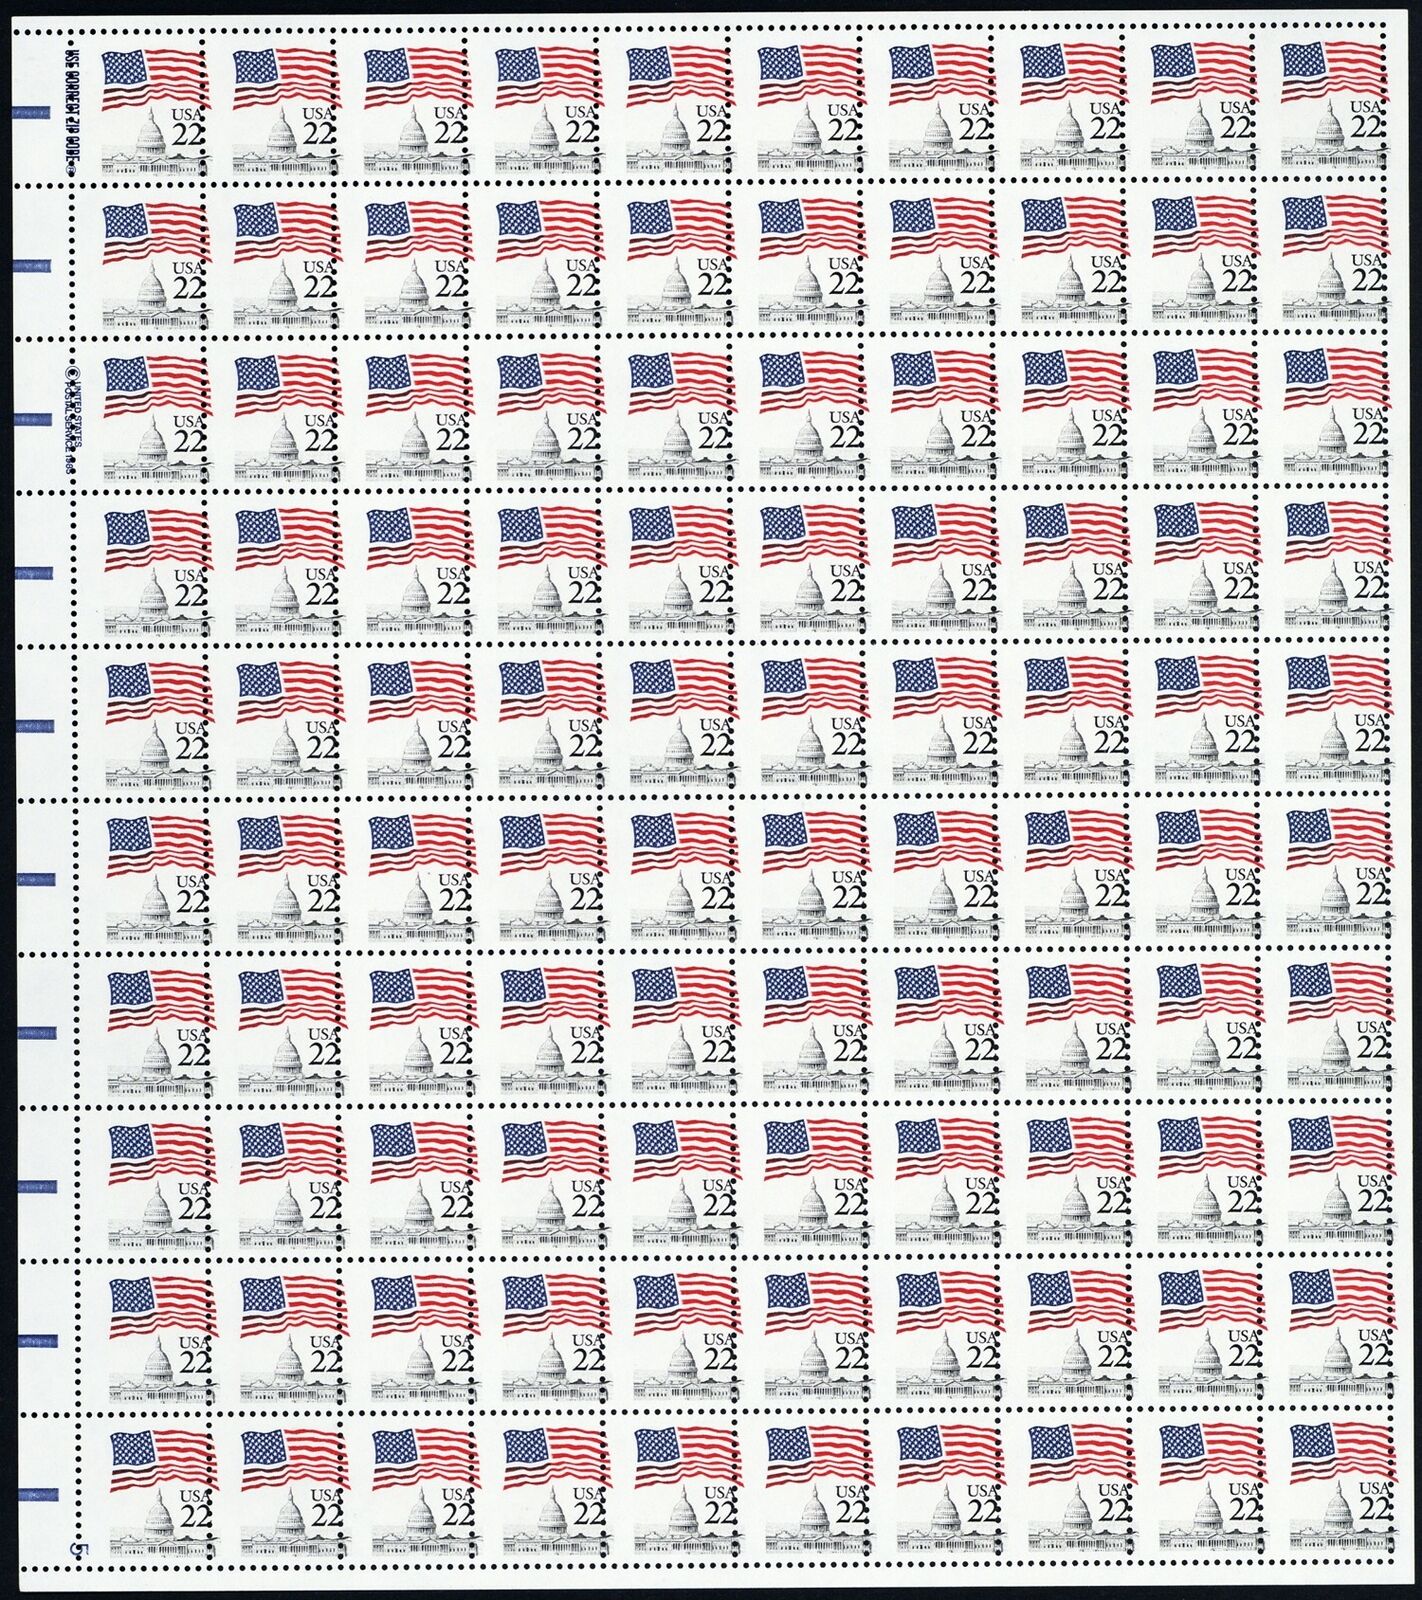 2114, Mnh 22¢ Flag & Capital Misperfed Error Sheet Of 100 Stamps - Stuart Katz